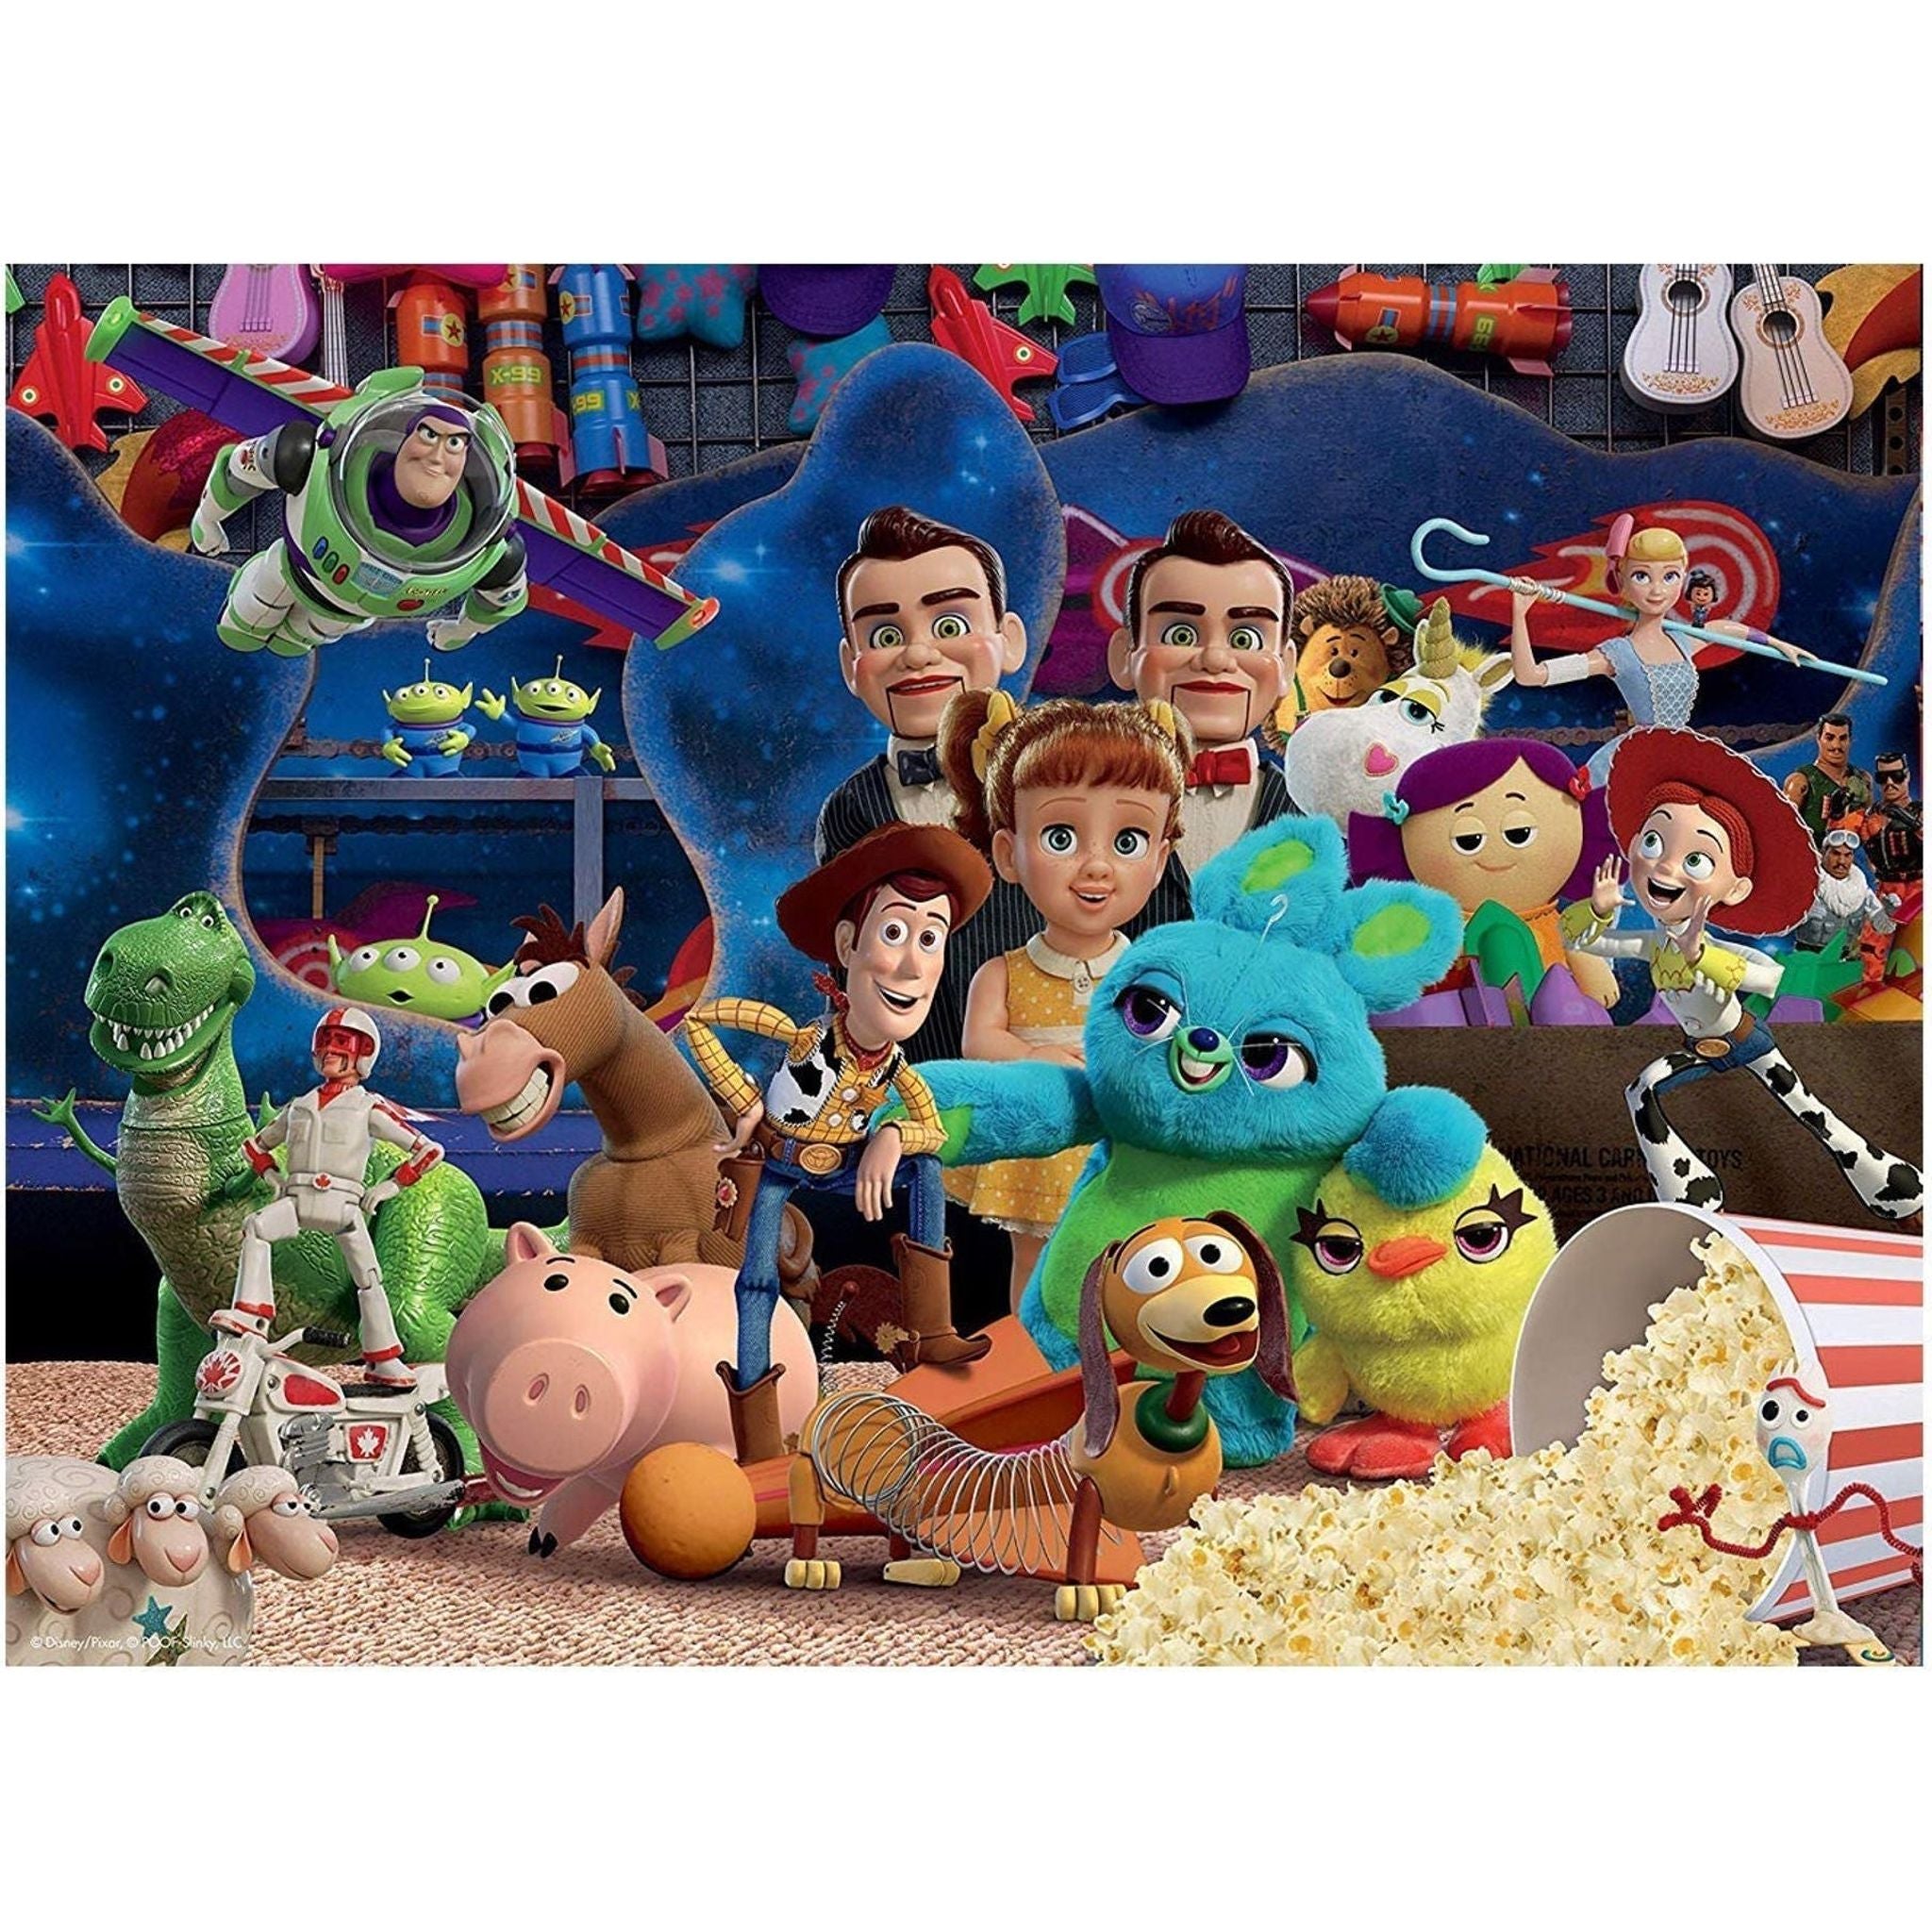 Ravensburger - Disney Toy Story 4 Puzzle 100pc - Toybox Tales